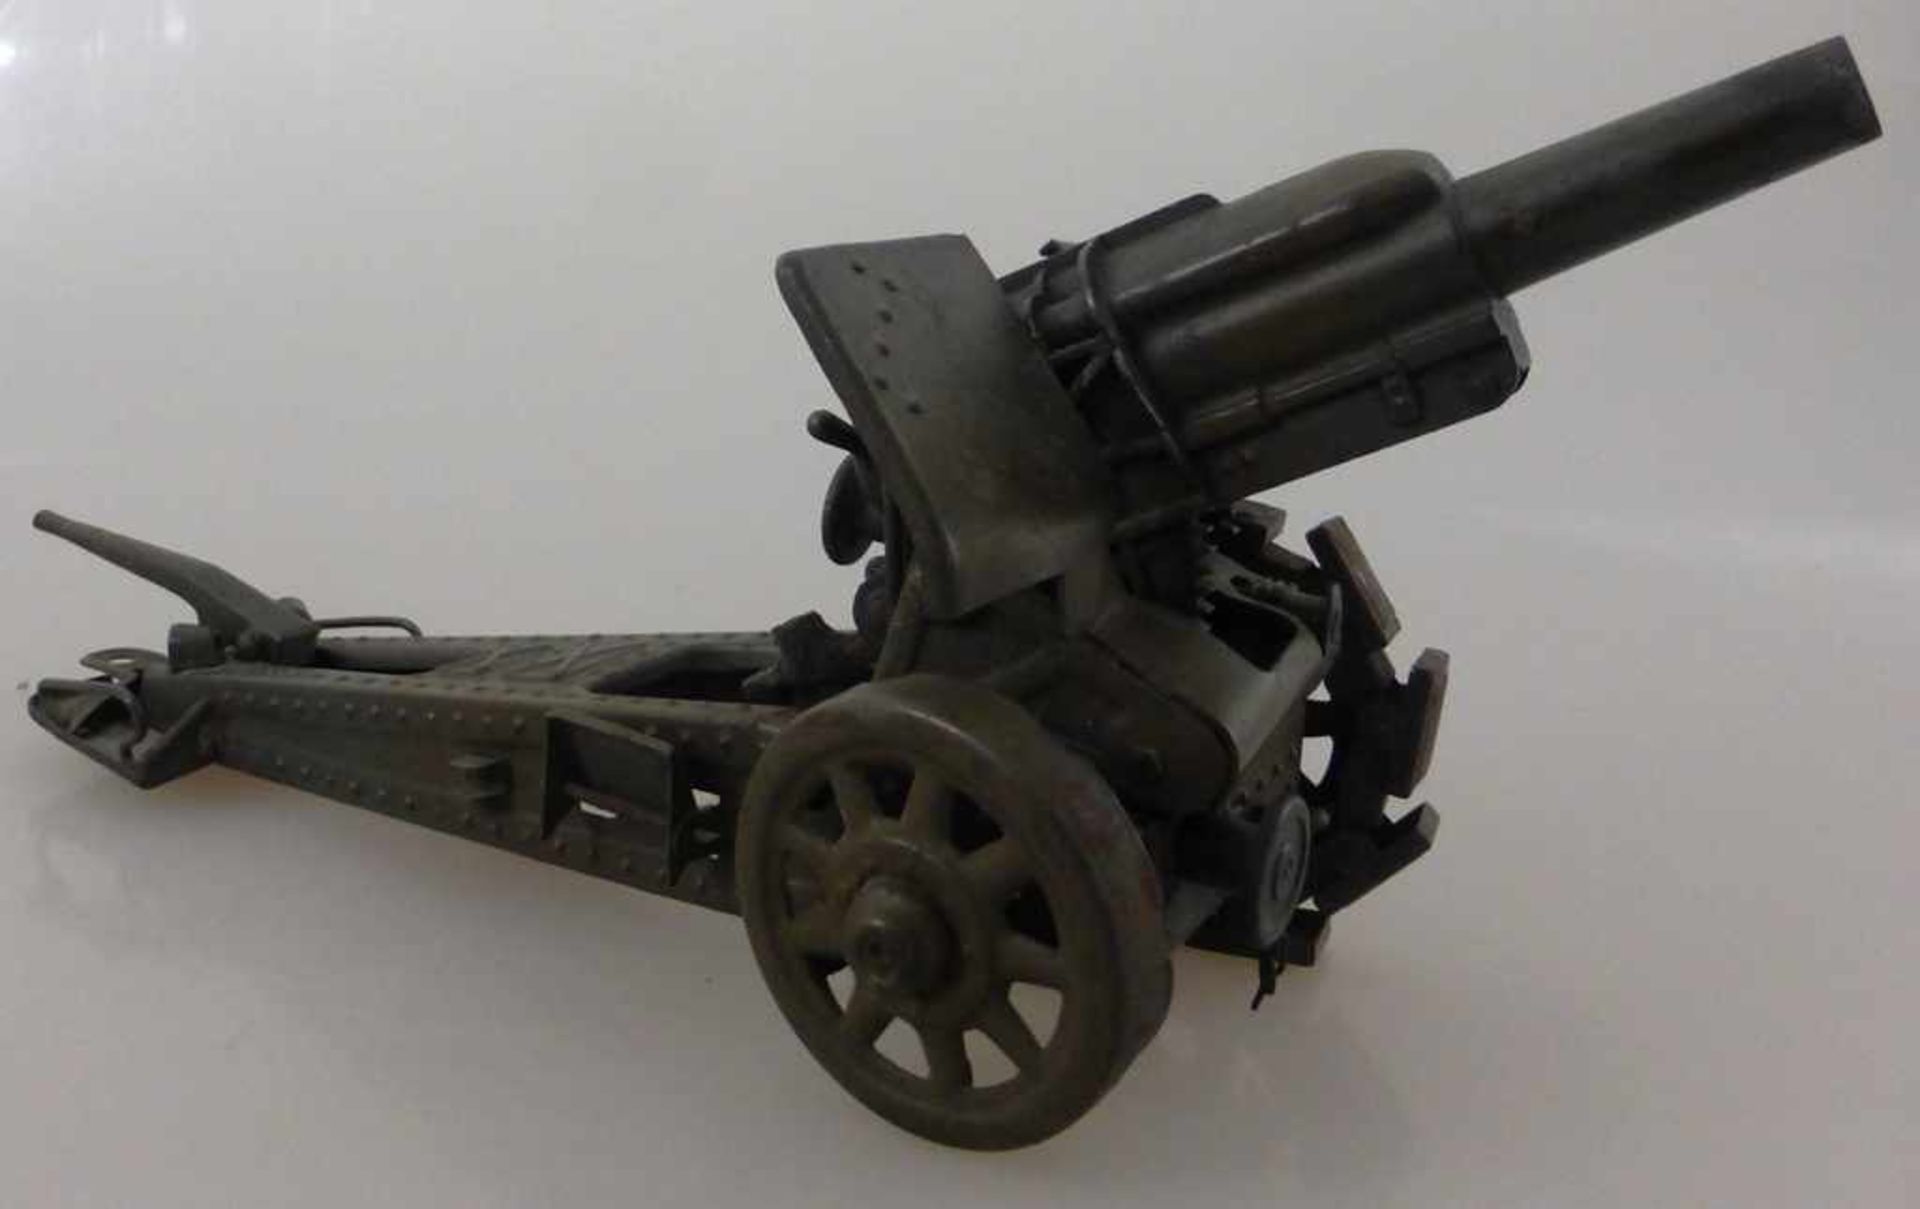 Blechspielzeug um 1930, Feldkanone, Blech lackiert, eine Schaufelkette fehlt, l. 27cm, passend zu